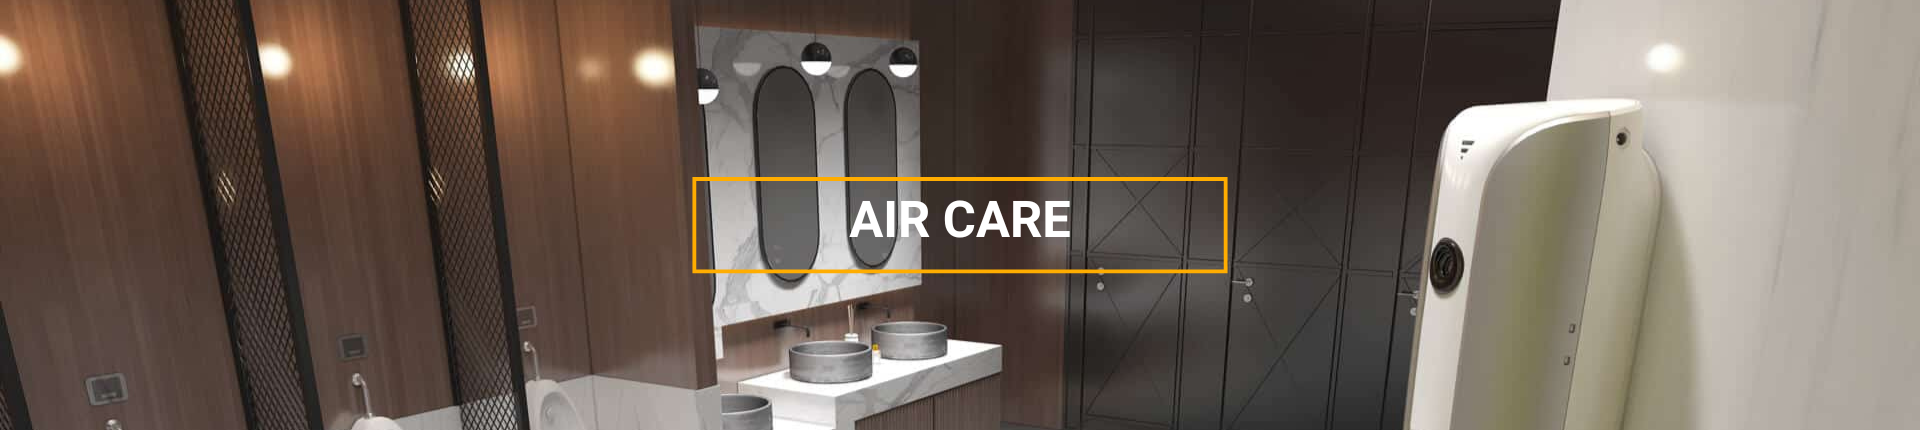 Air Care Banner